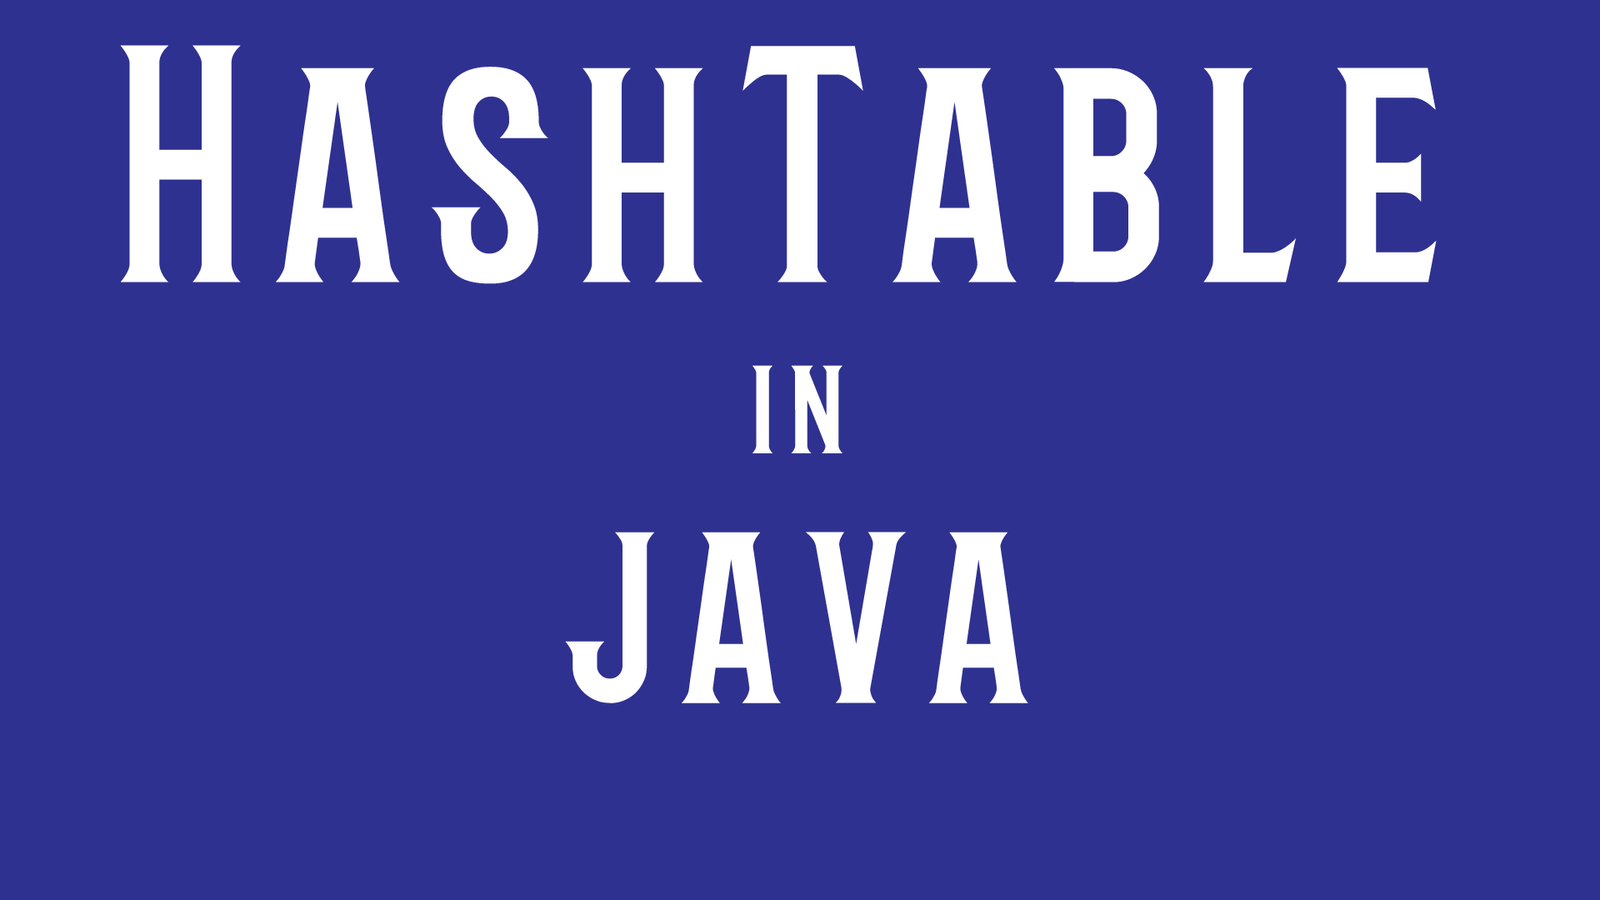 Java HashTable